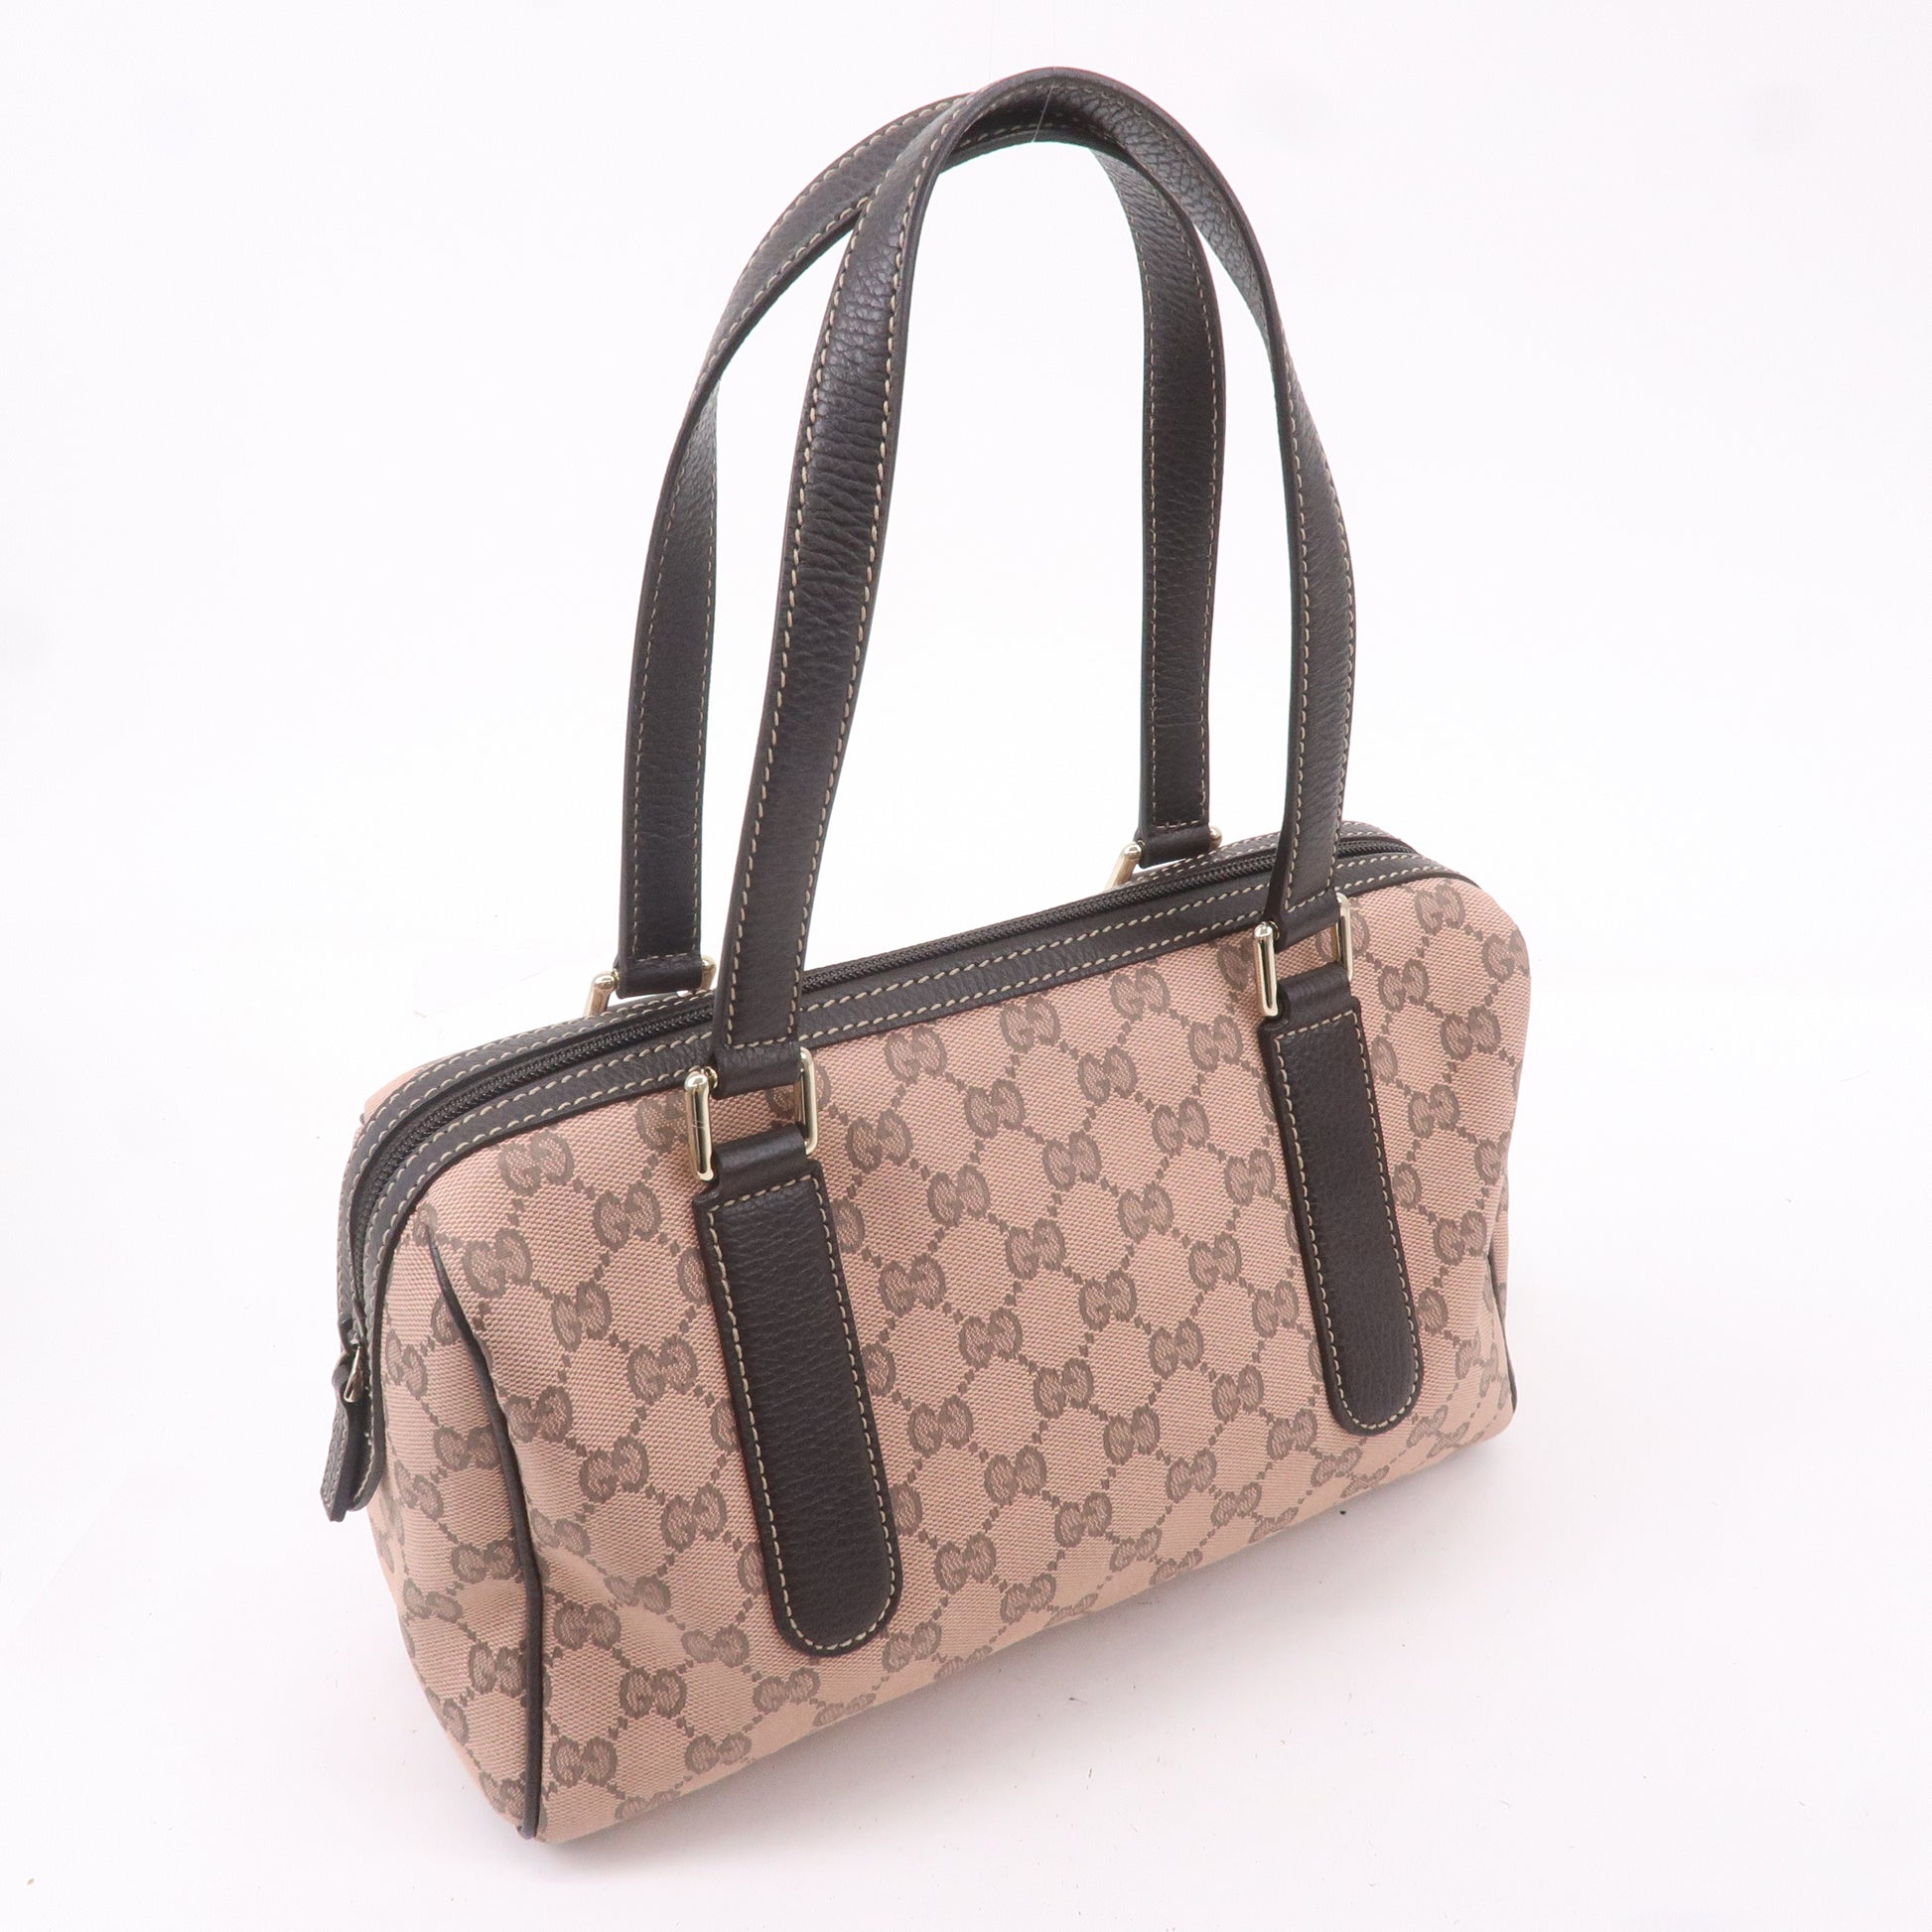 Authentic Gucci Vintage Web Boston Bag - MINT condition!, Luxury